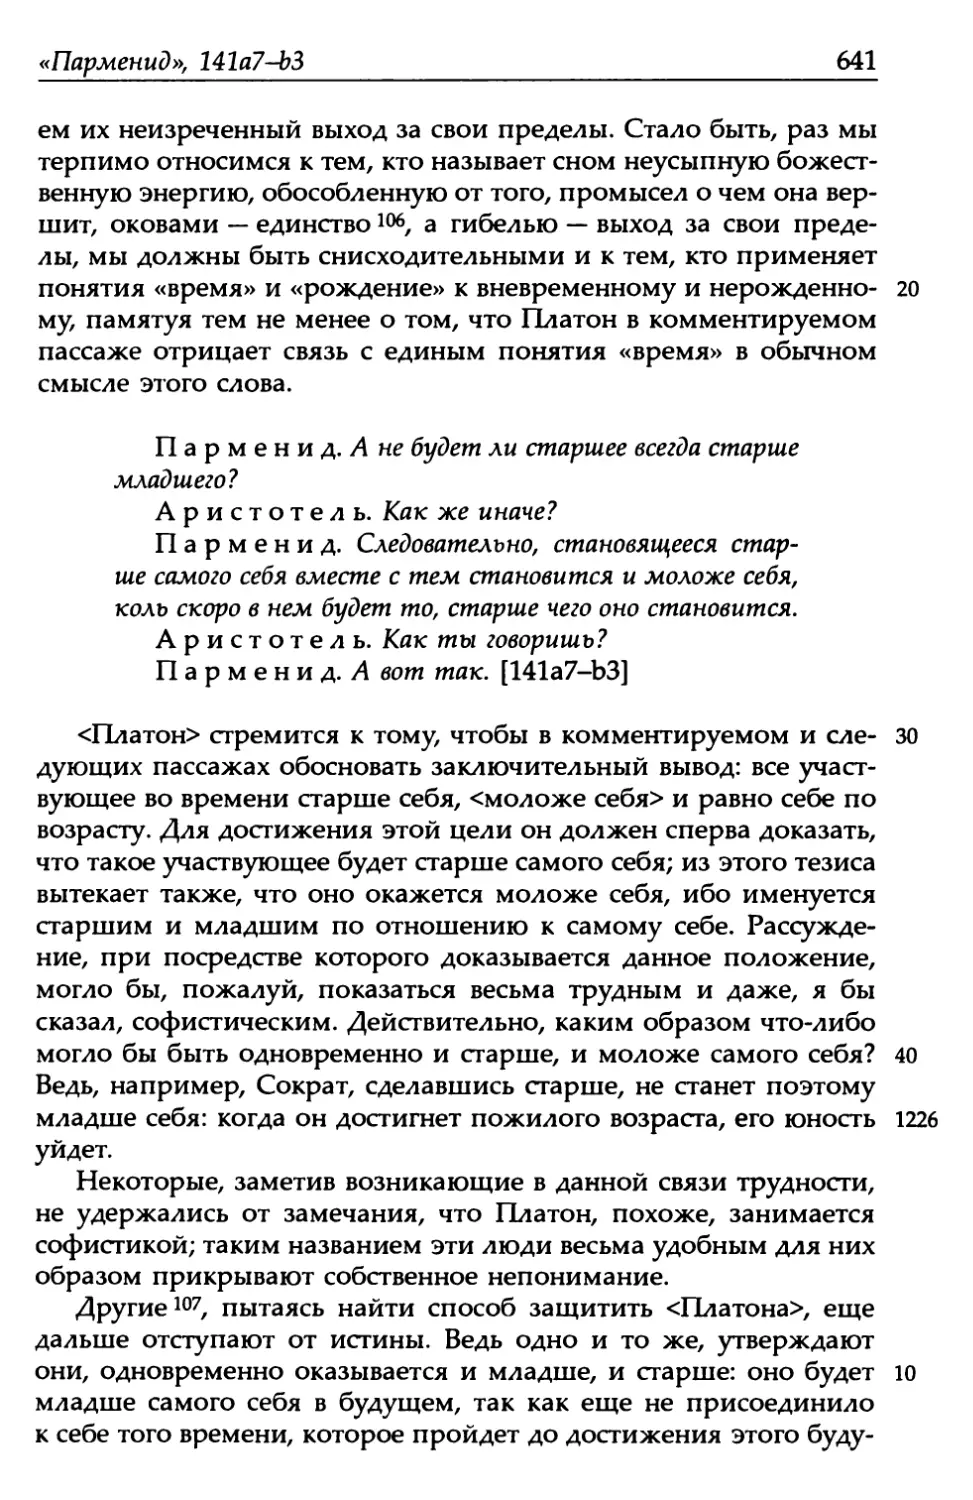 «Парменид», 141а7-bЗ